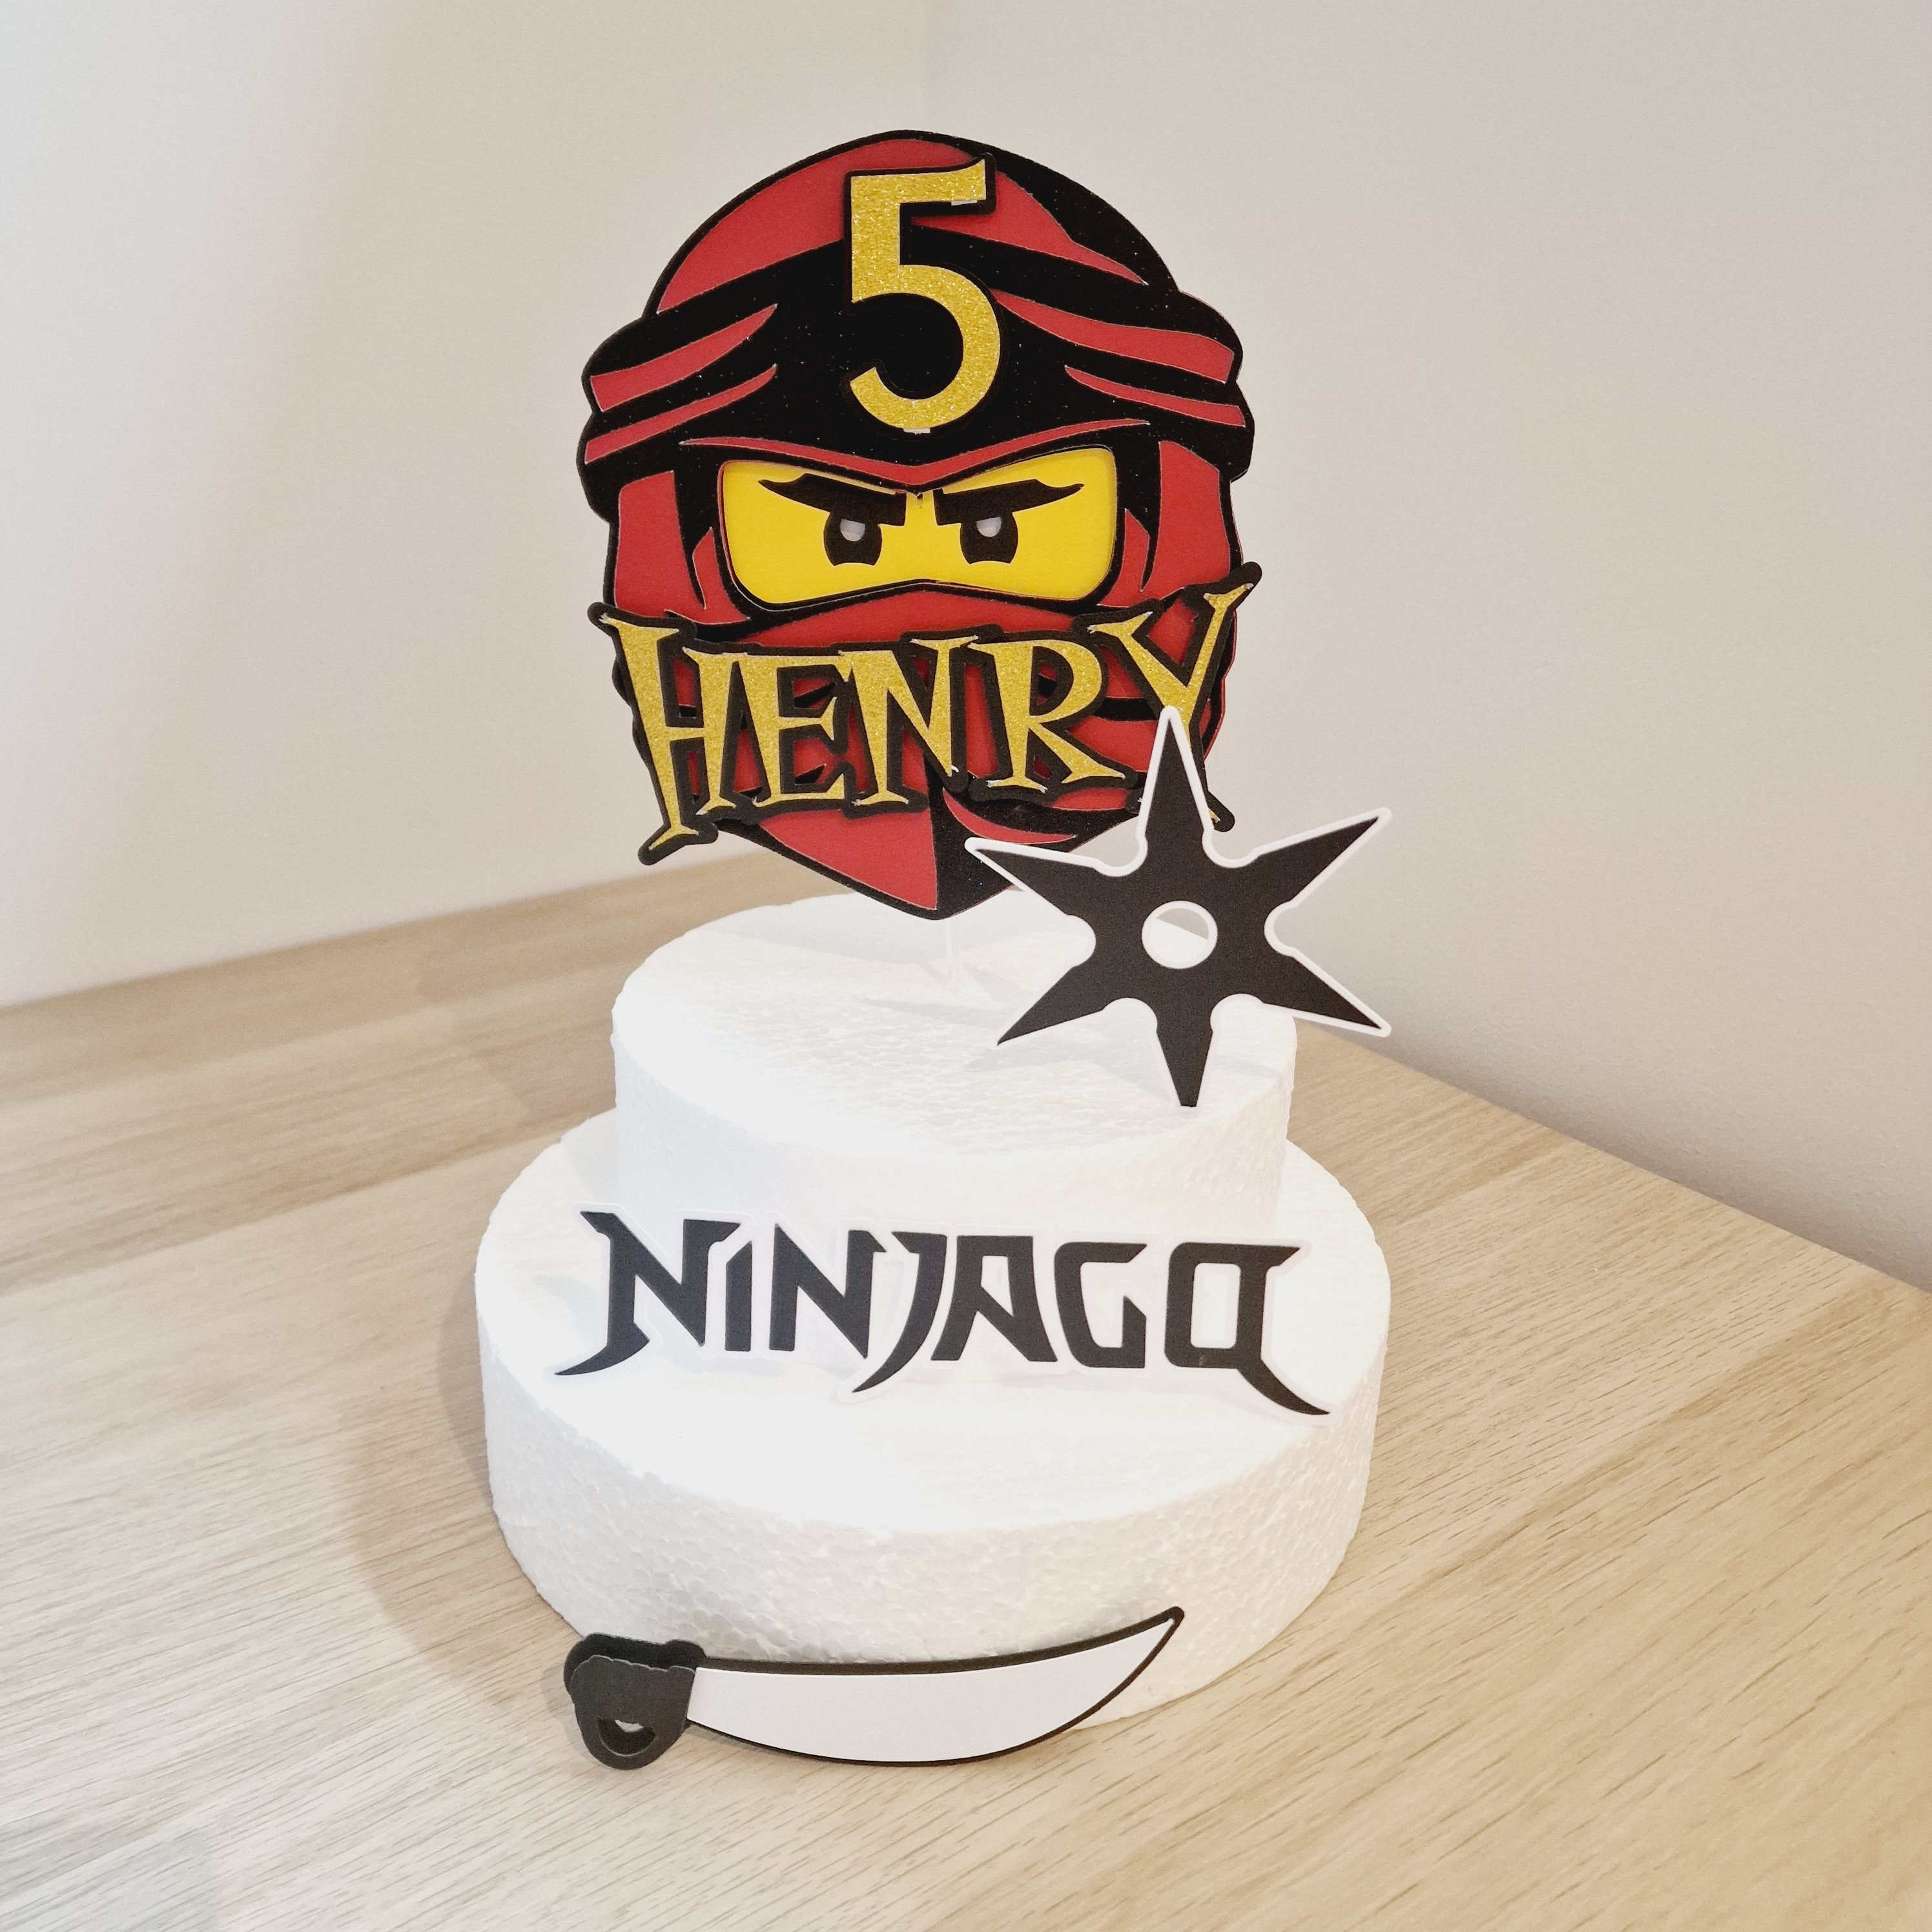 anniversaire-ninjago-party-sweet-table-cake-gateau-tee-shirt